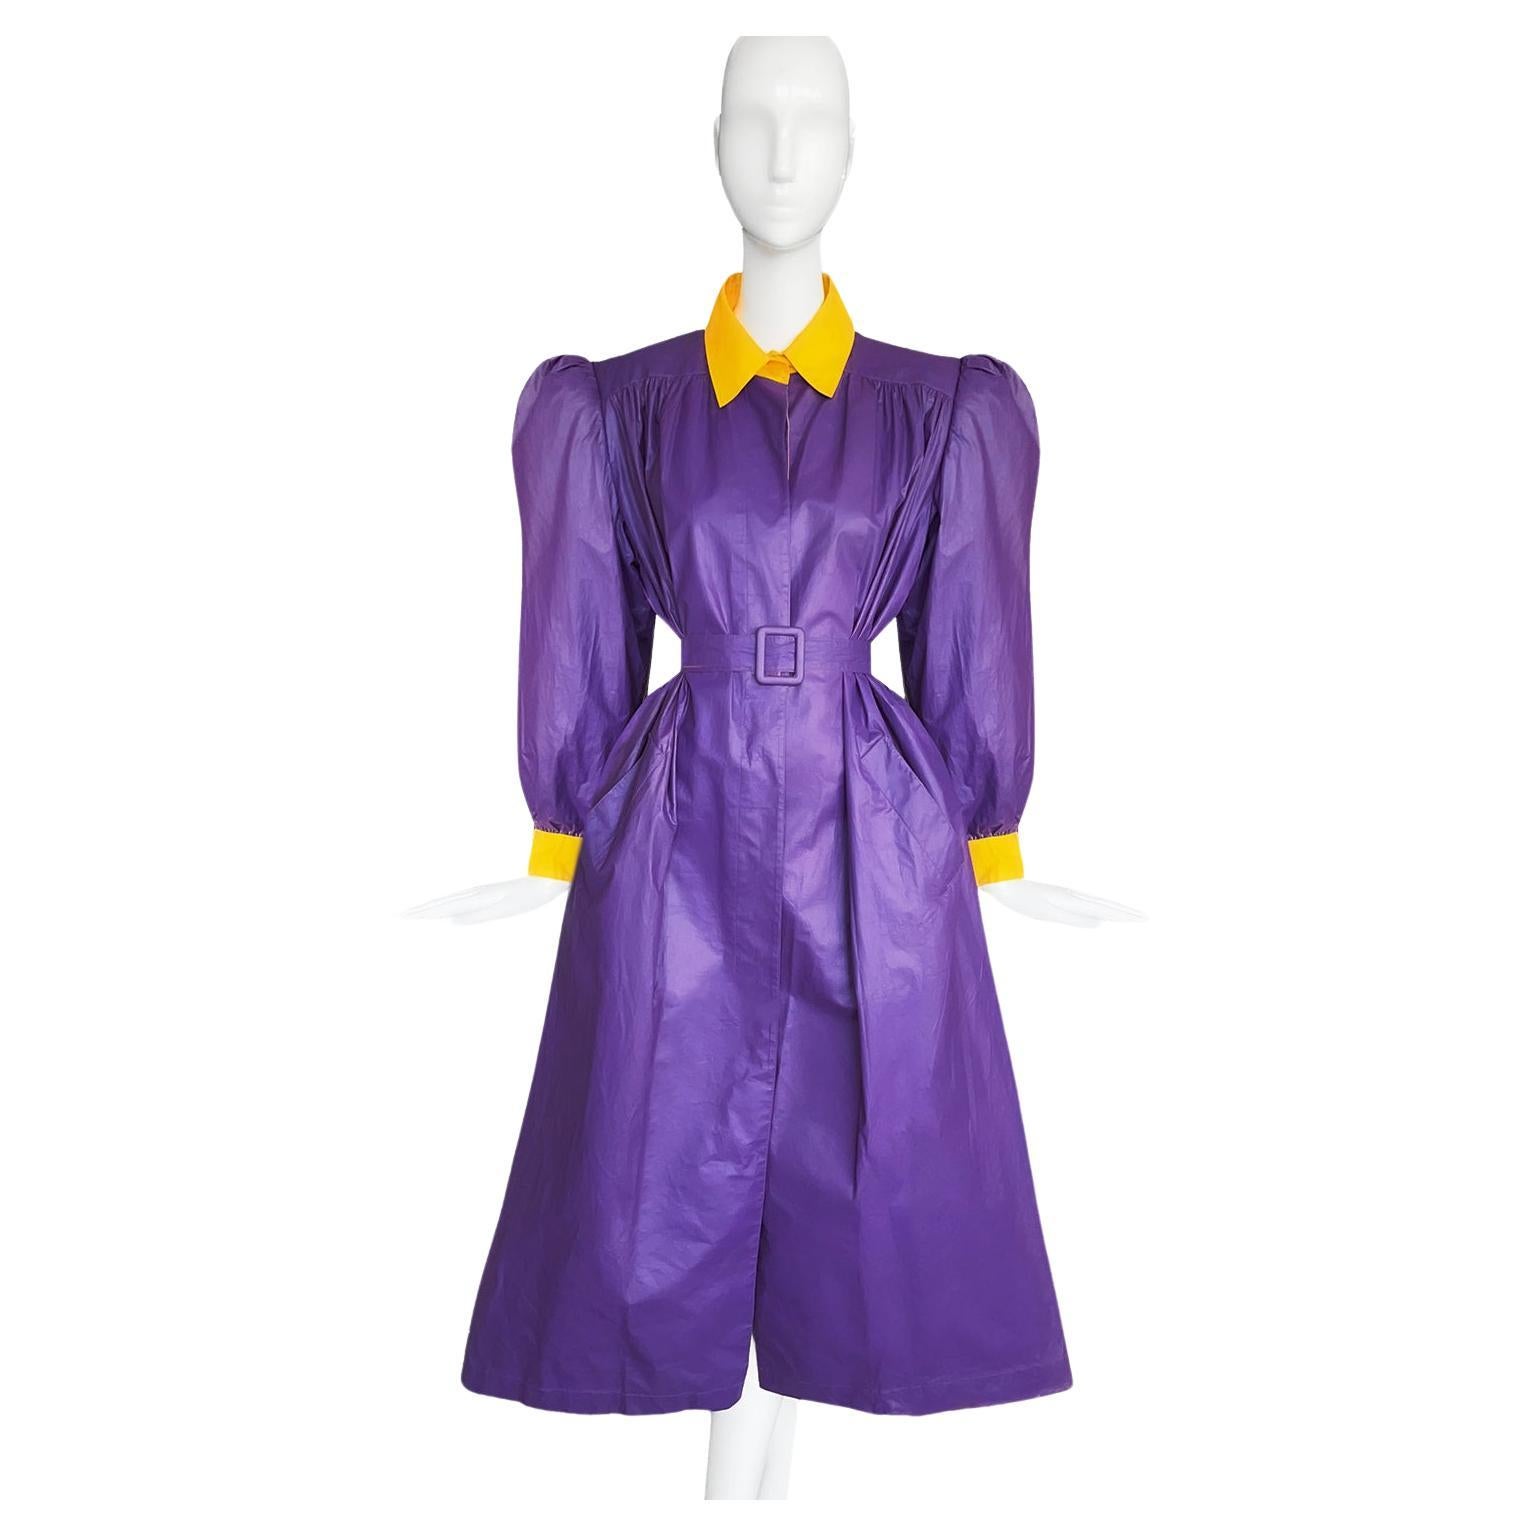 Seltener Valentino Regenmantel Vintage Trenchcoat Lila Violett Gelb im Angebot